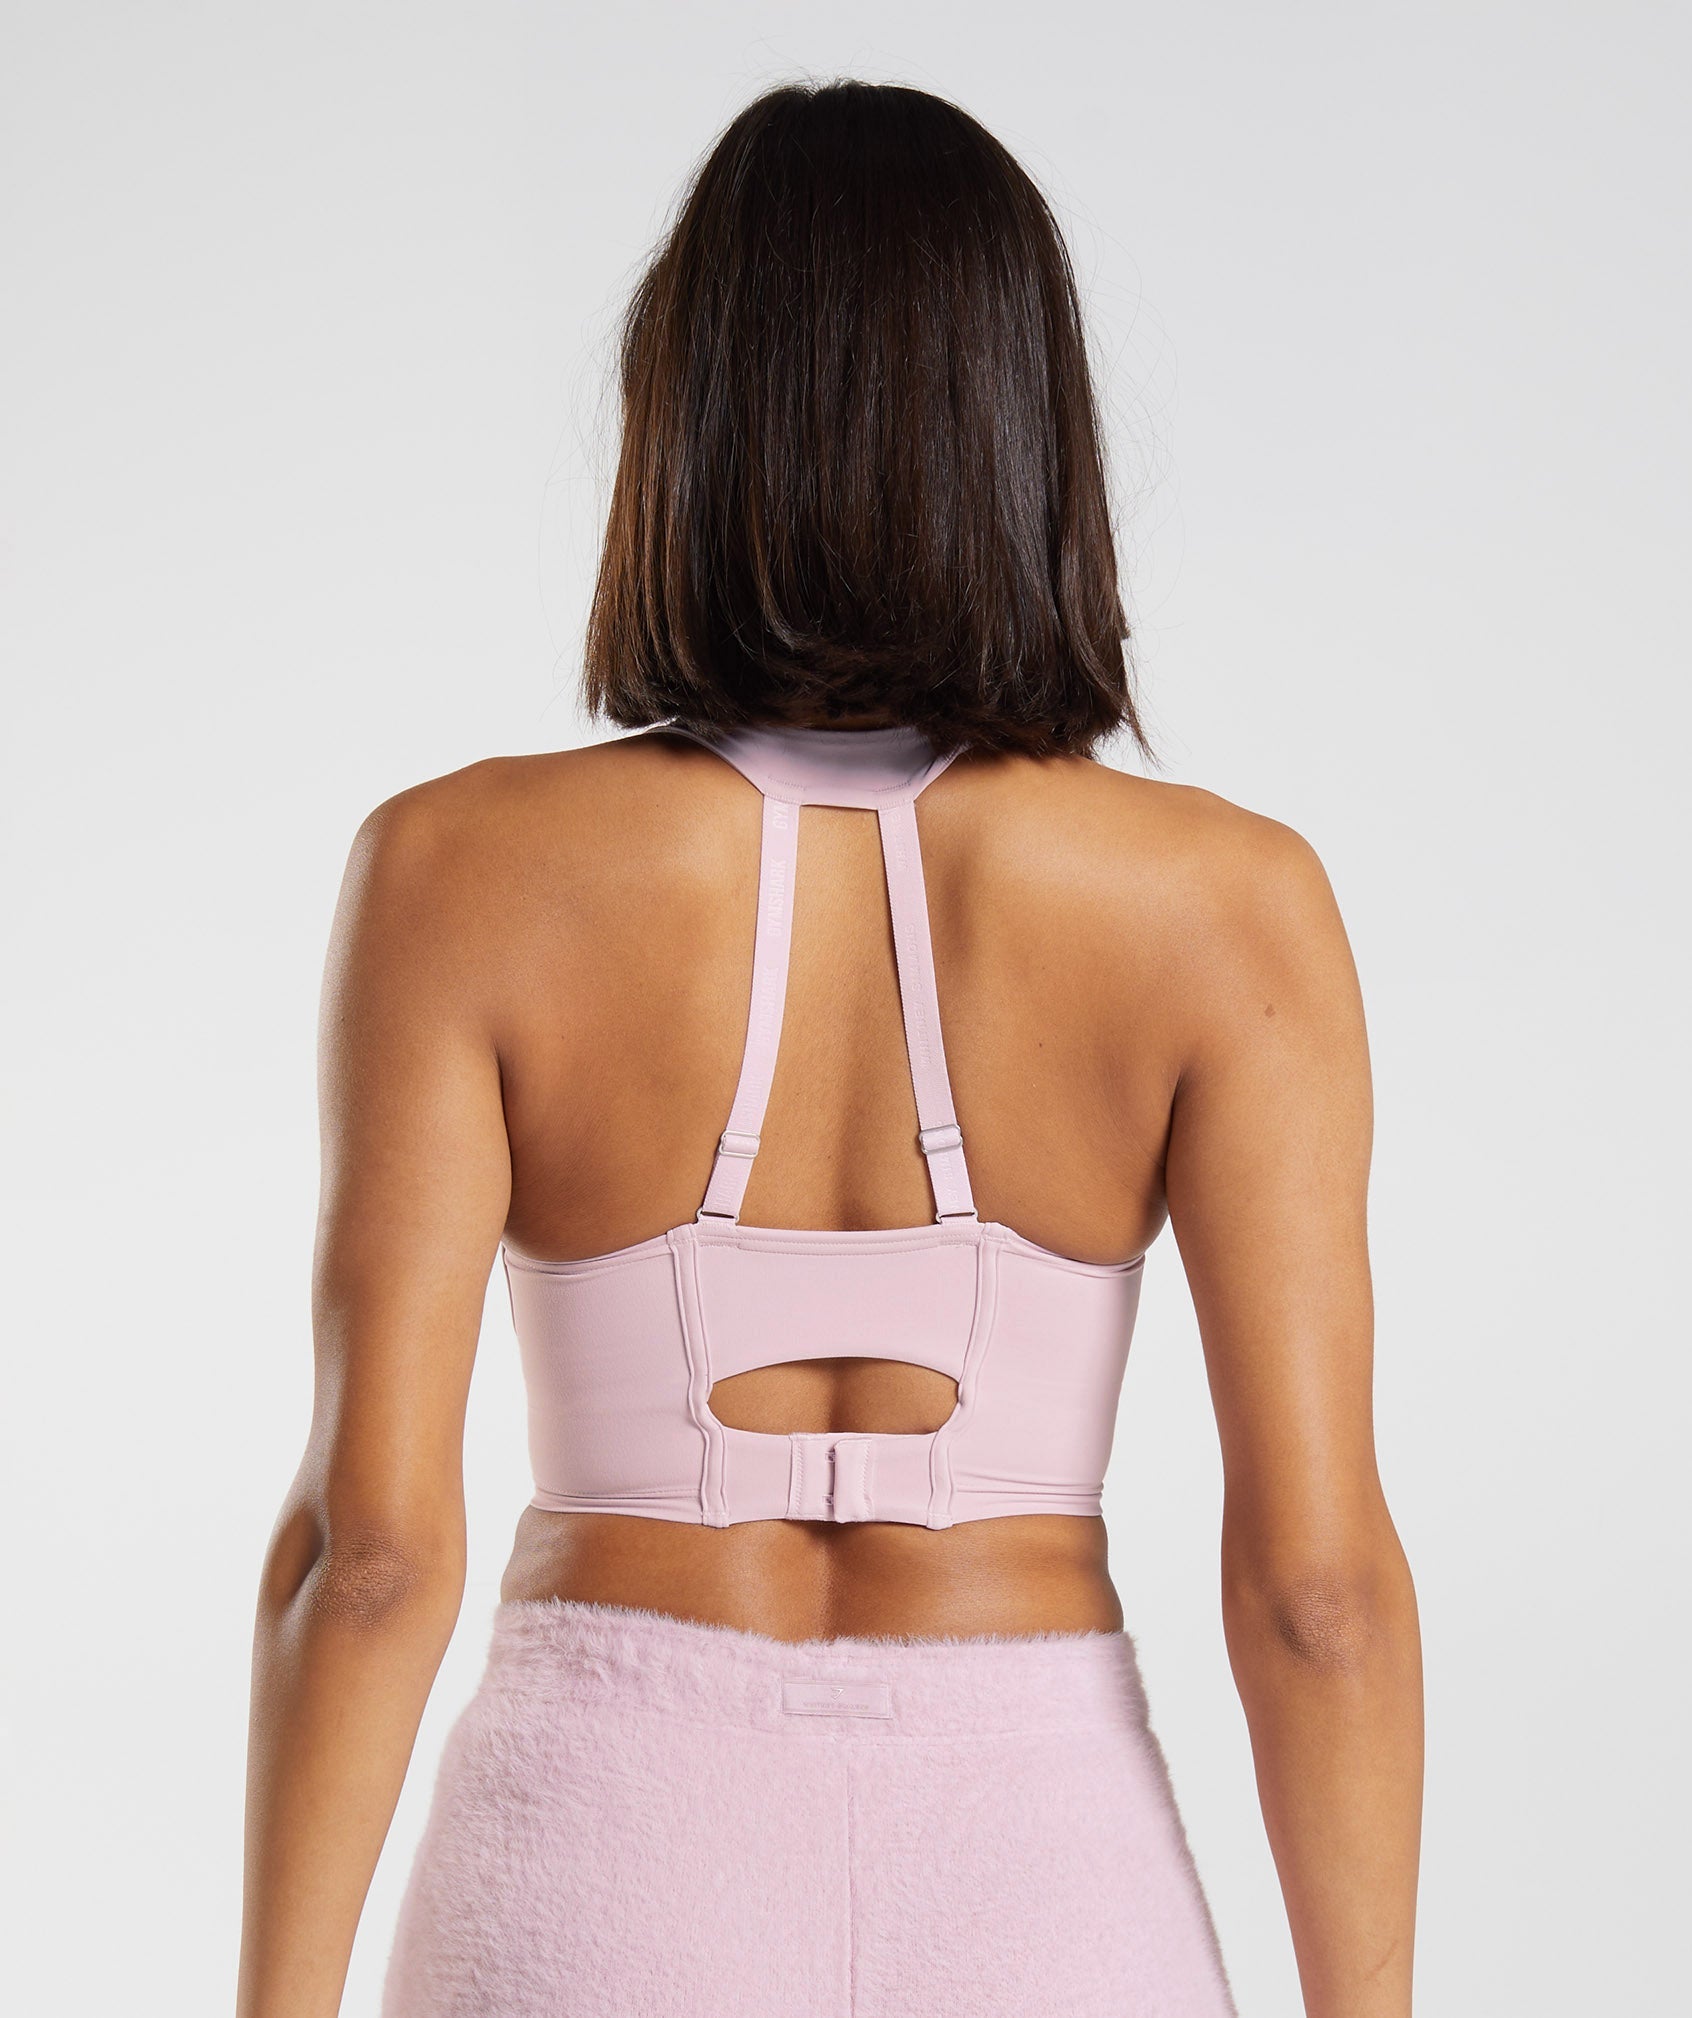 Gymshark Whitney Eyelash Knit Shorts - Pressed Petal Pink